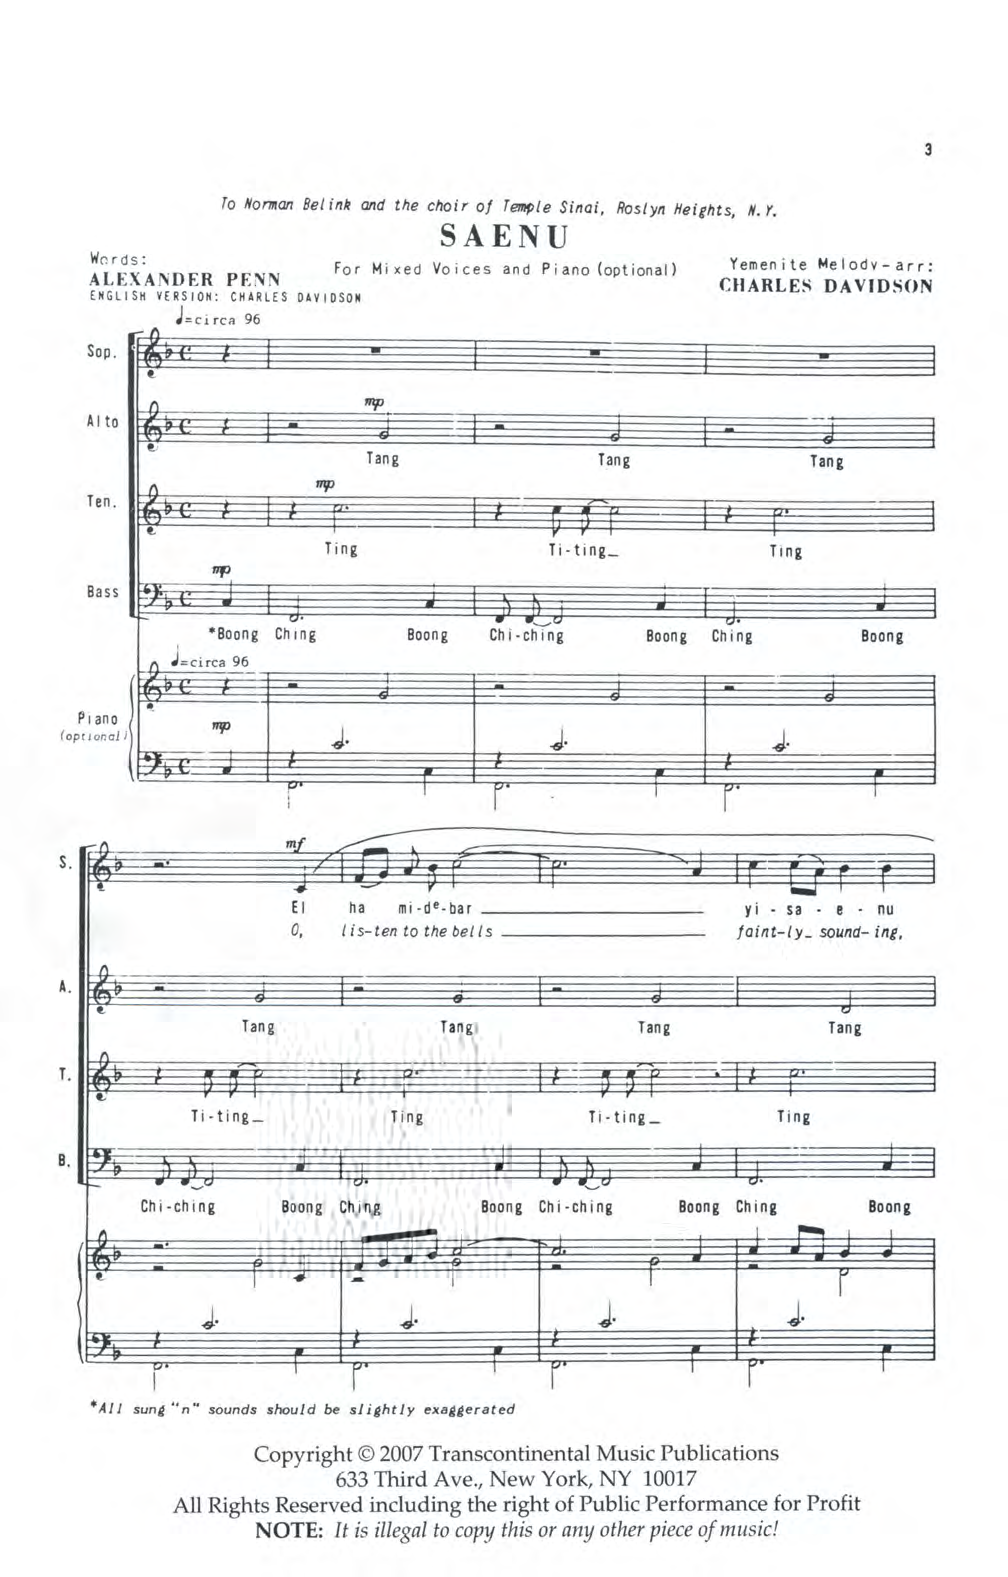 Charles Davidson Saenu Sheet Music Notes & Chords for Choral - Download or Print PDF